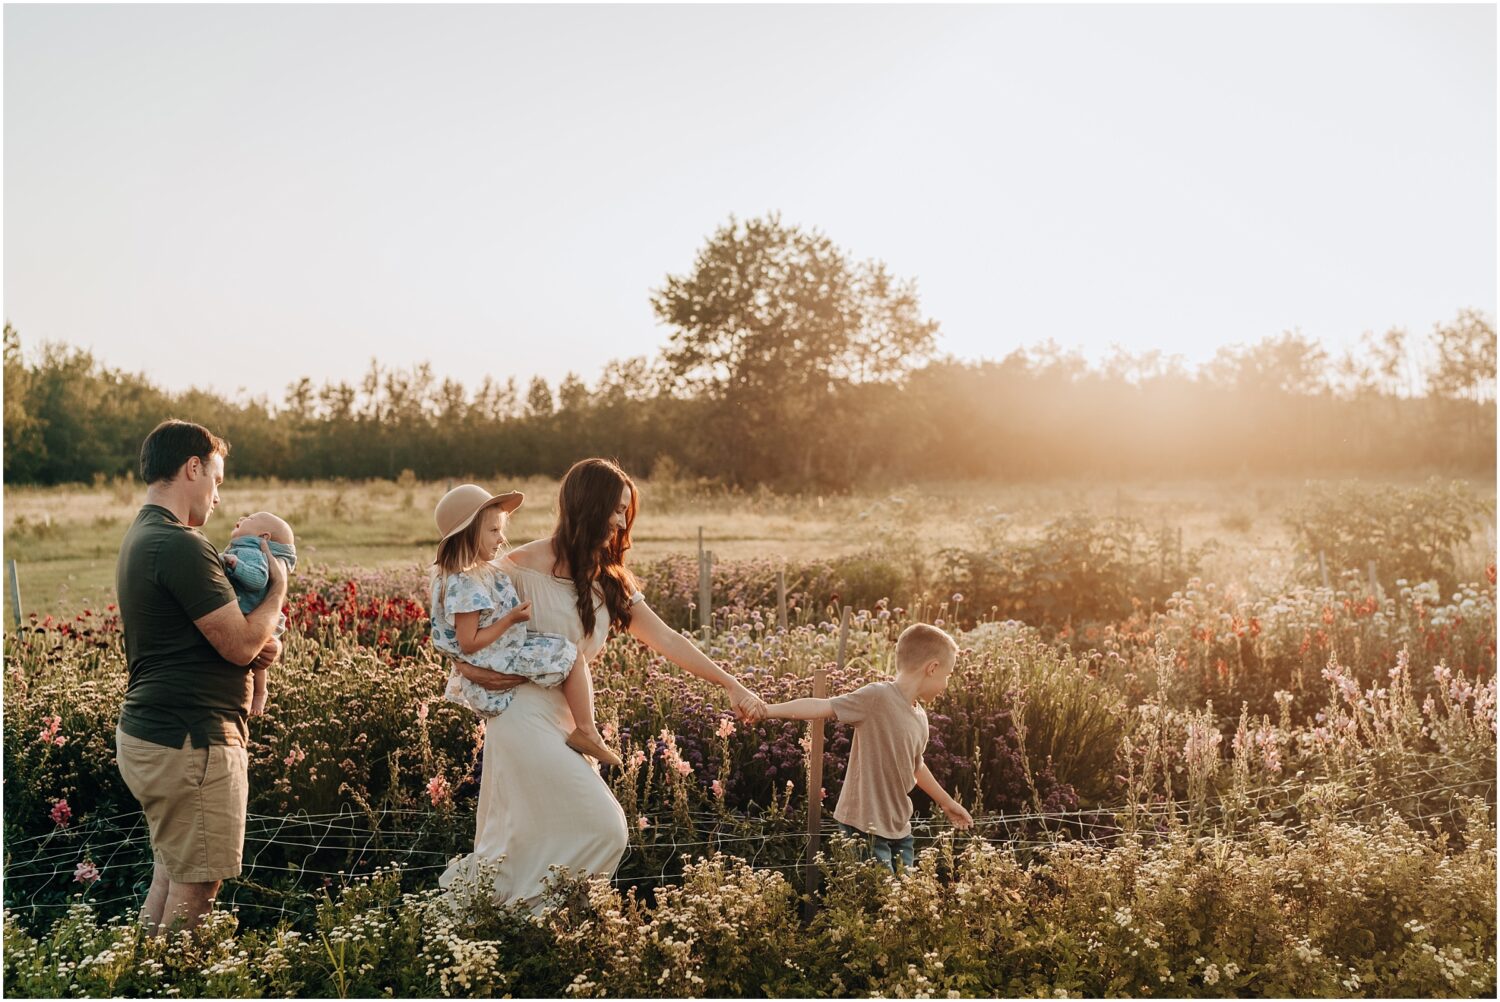 Edmonton family photo session in a flower farm